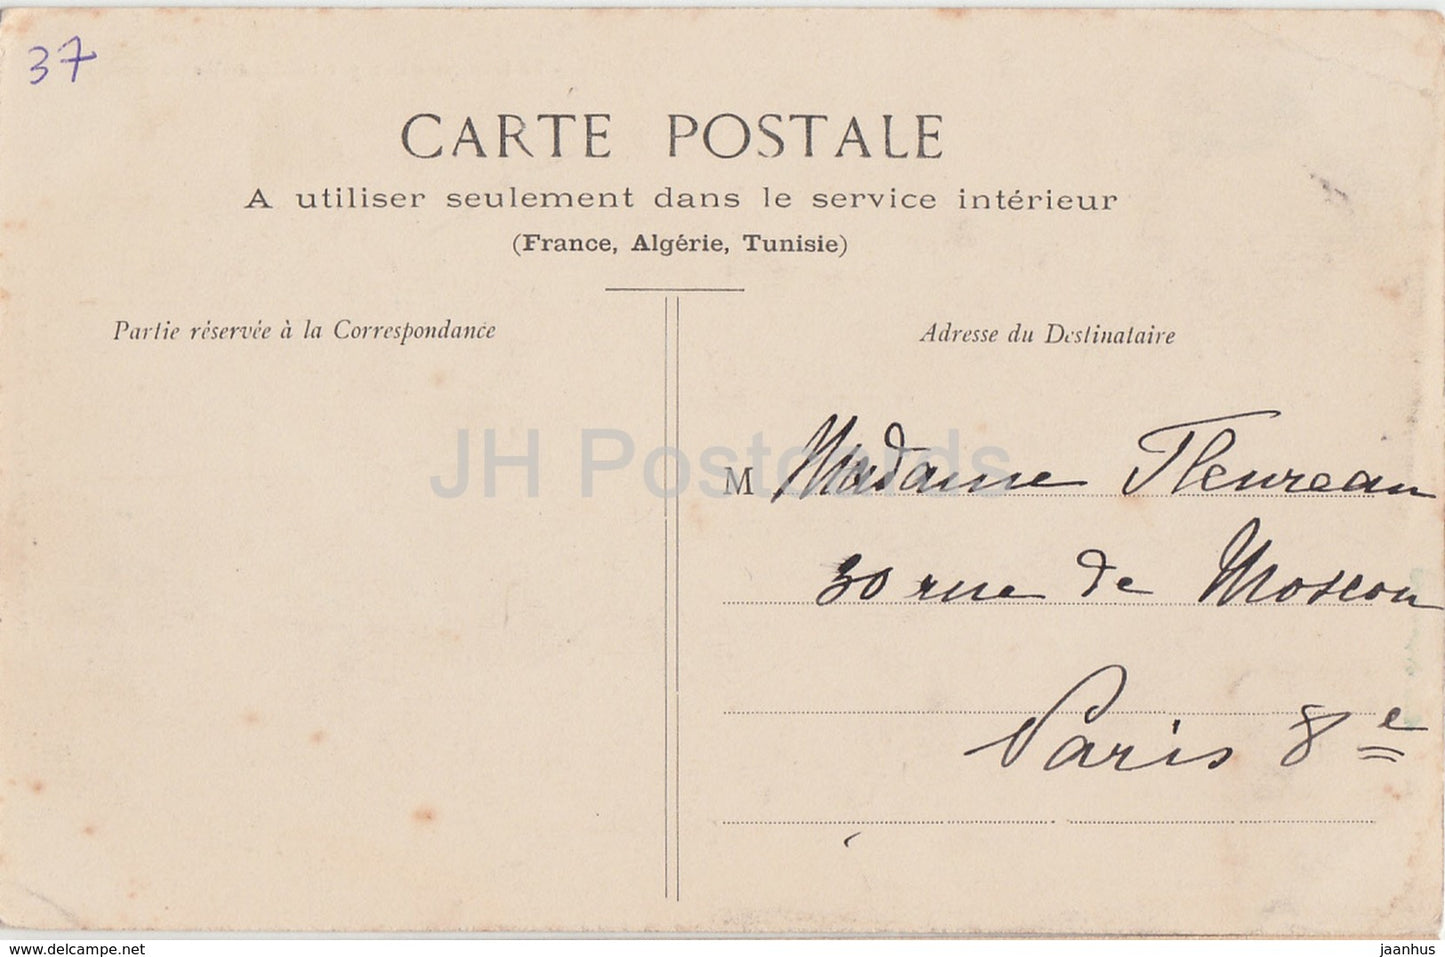 Loches - Le Donjon - Bati par Foulques Nerra - 30 - alte Postkarte - Frankreich - gebraucht